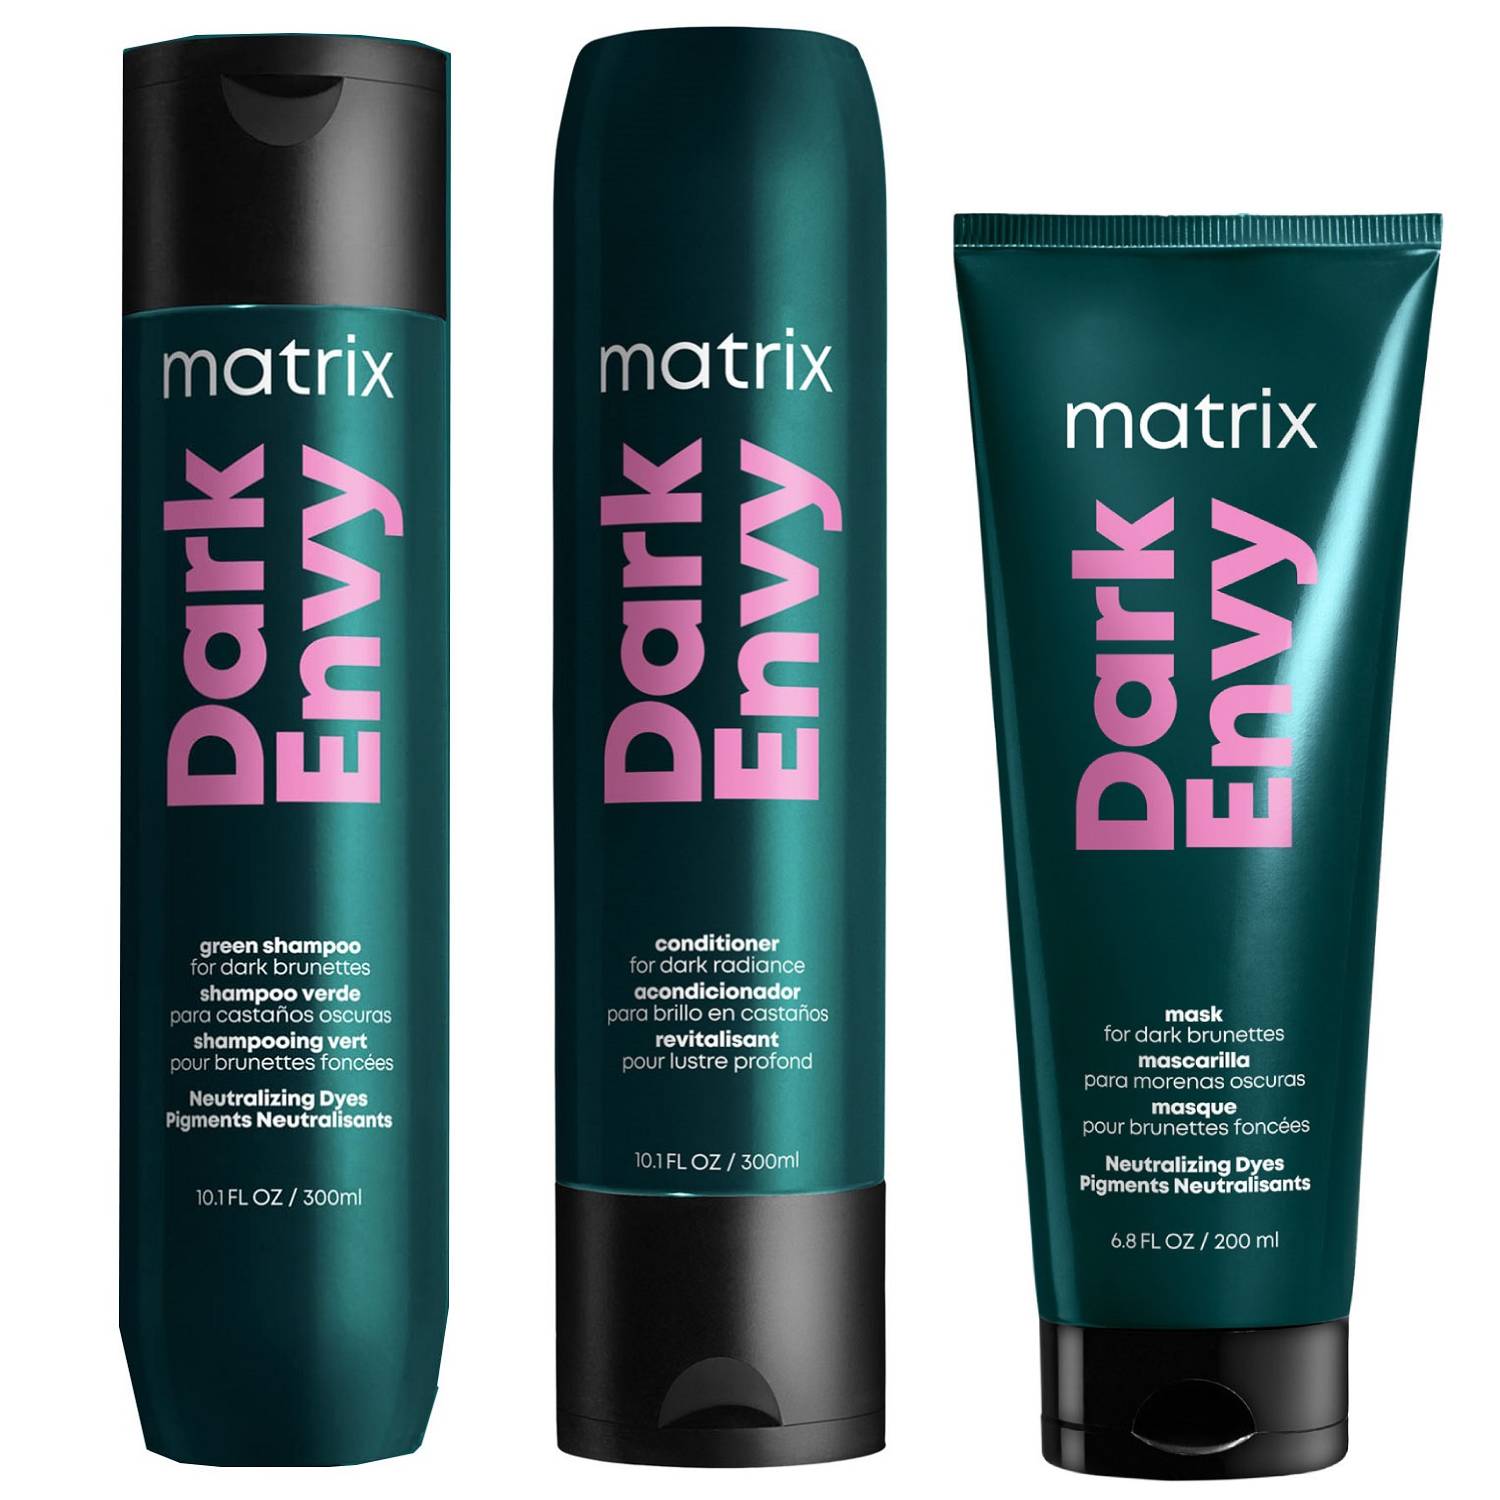 matrix shampoo total results dark envy Matrix Набор для брюнеток: шампунь 300 мл + кондиционер 300 мл + маска 200 мл (Matrix, Total results)